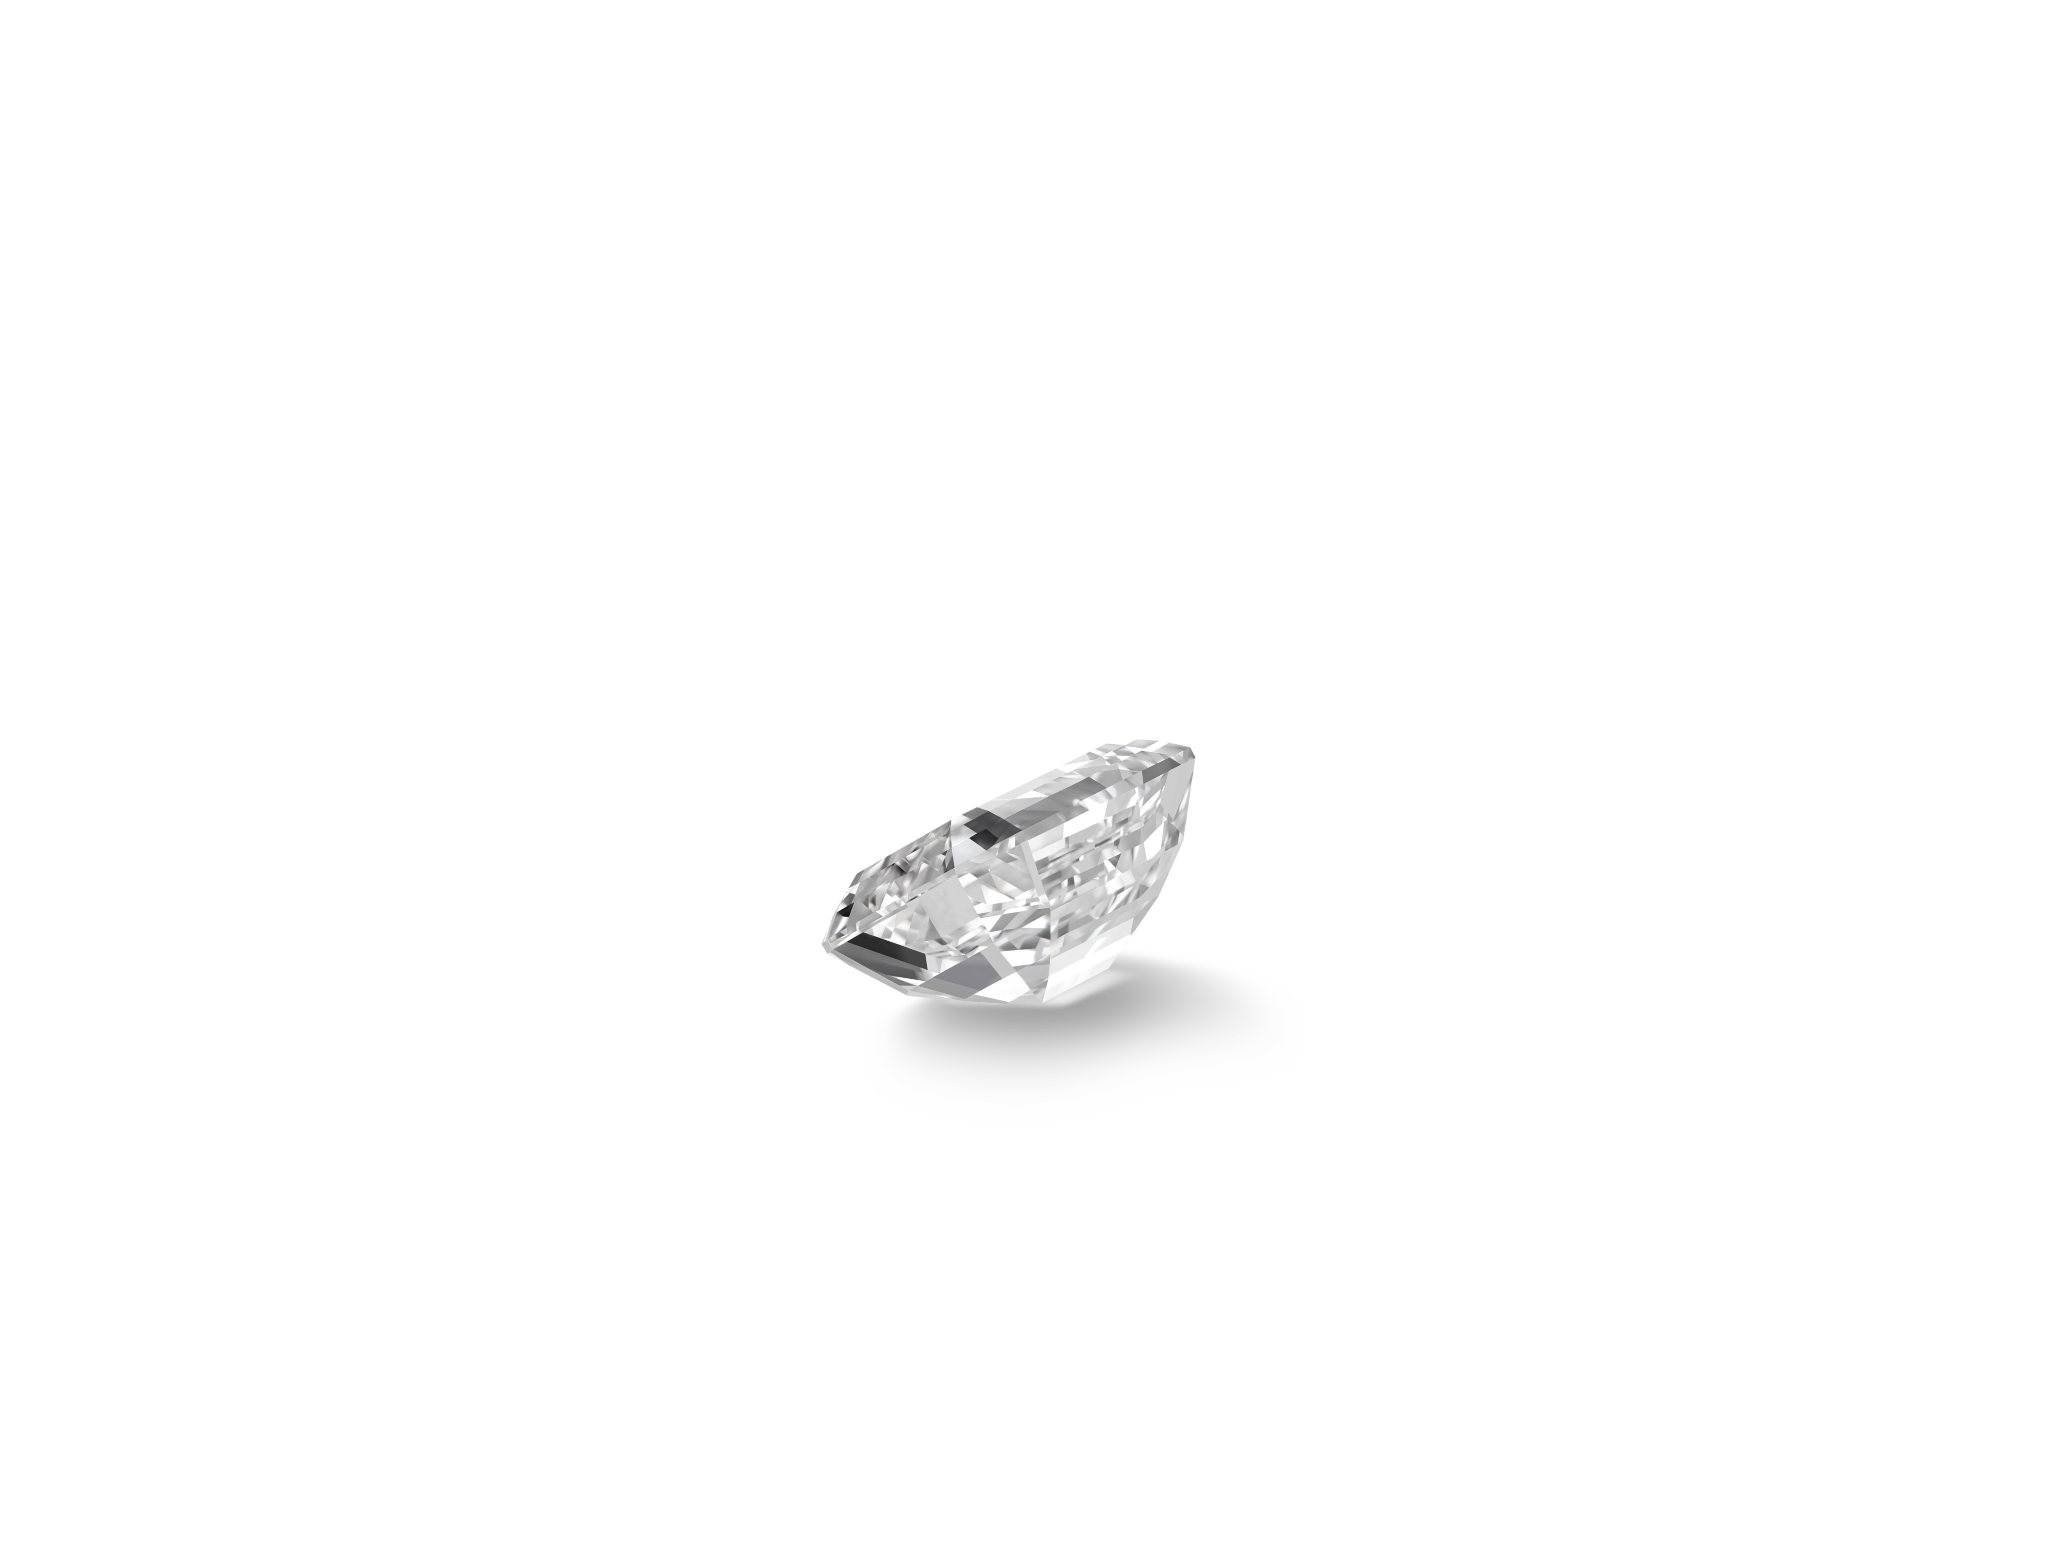 Back view of 1 carat white emerald cut diamond